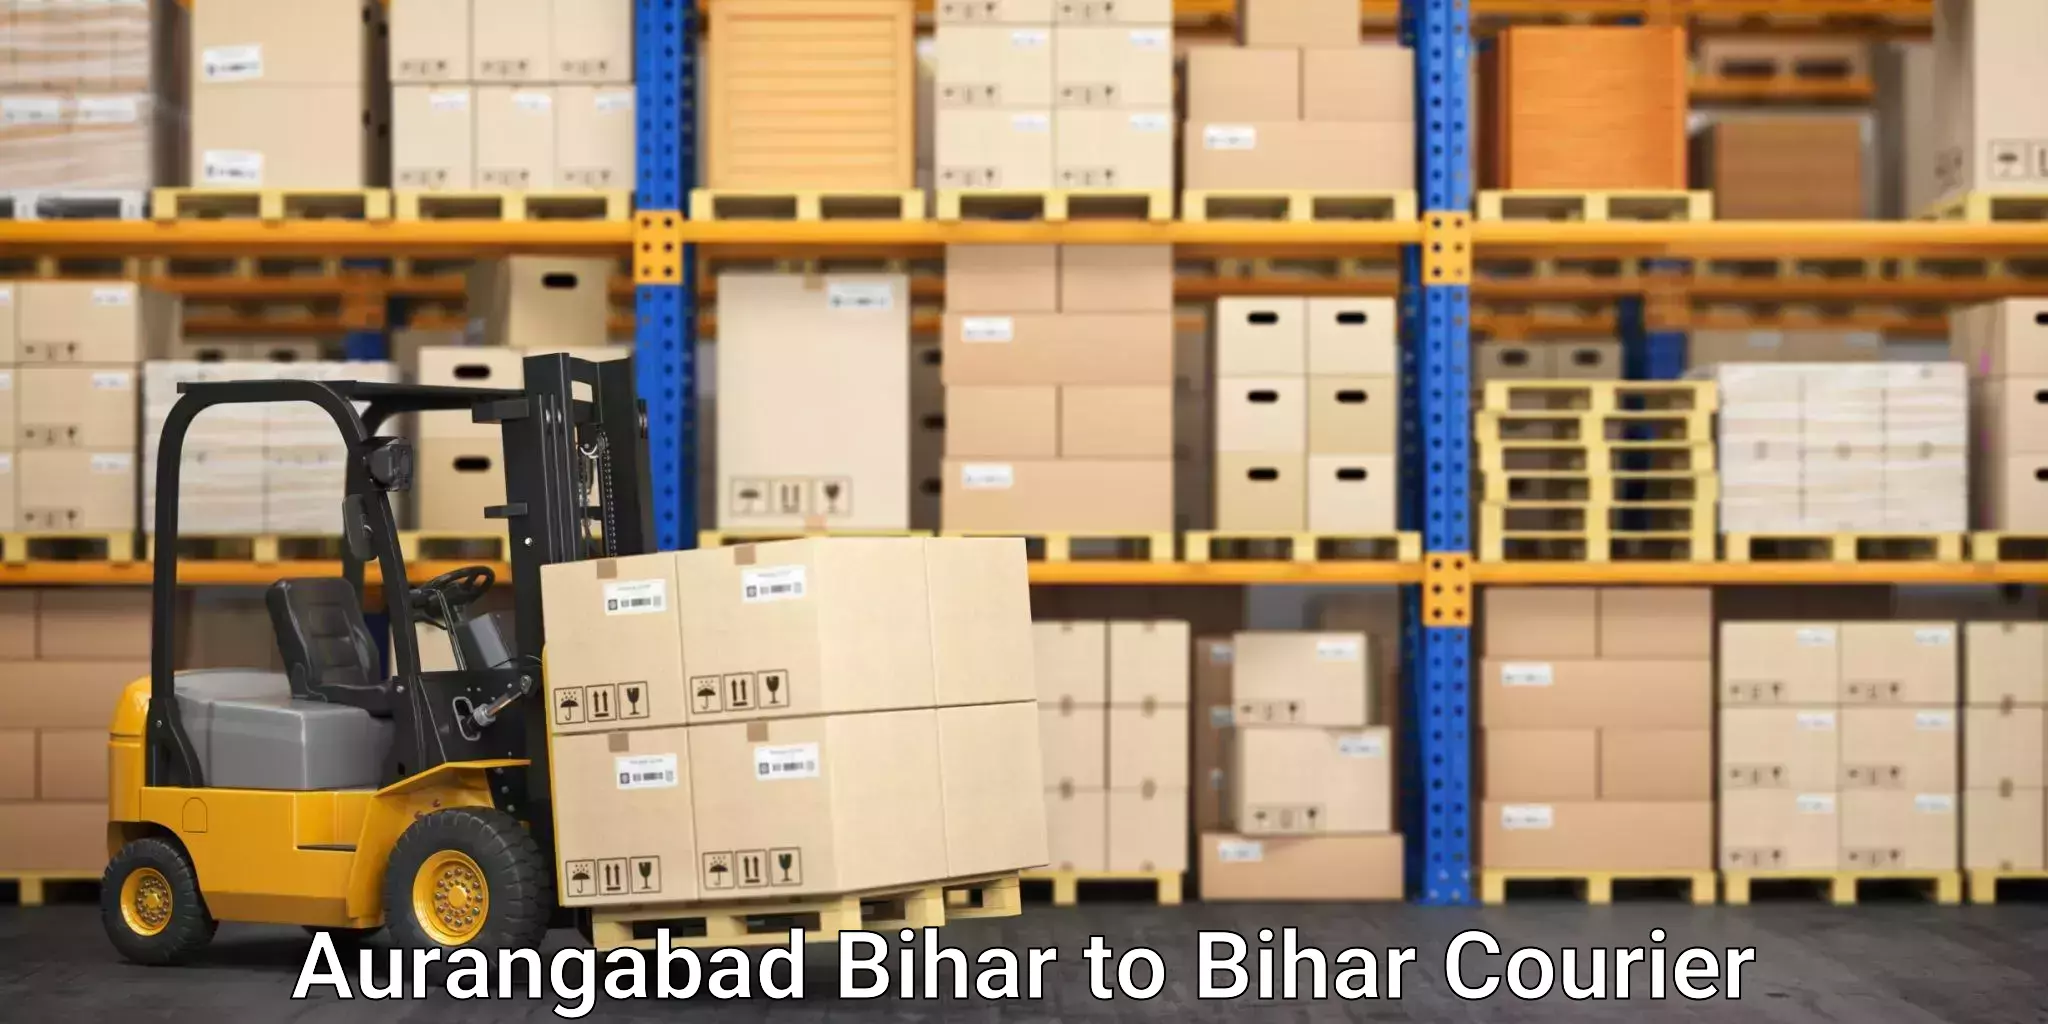 Professional home movers Aurangabad Bihar to Nawada